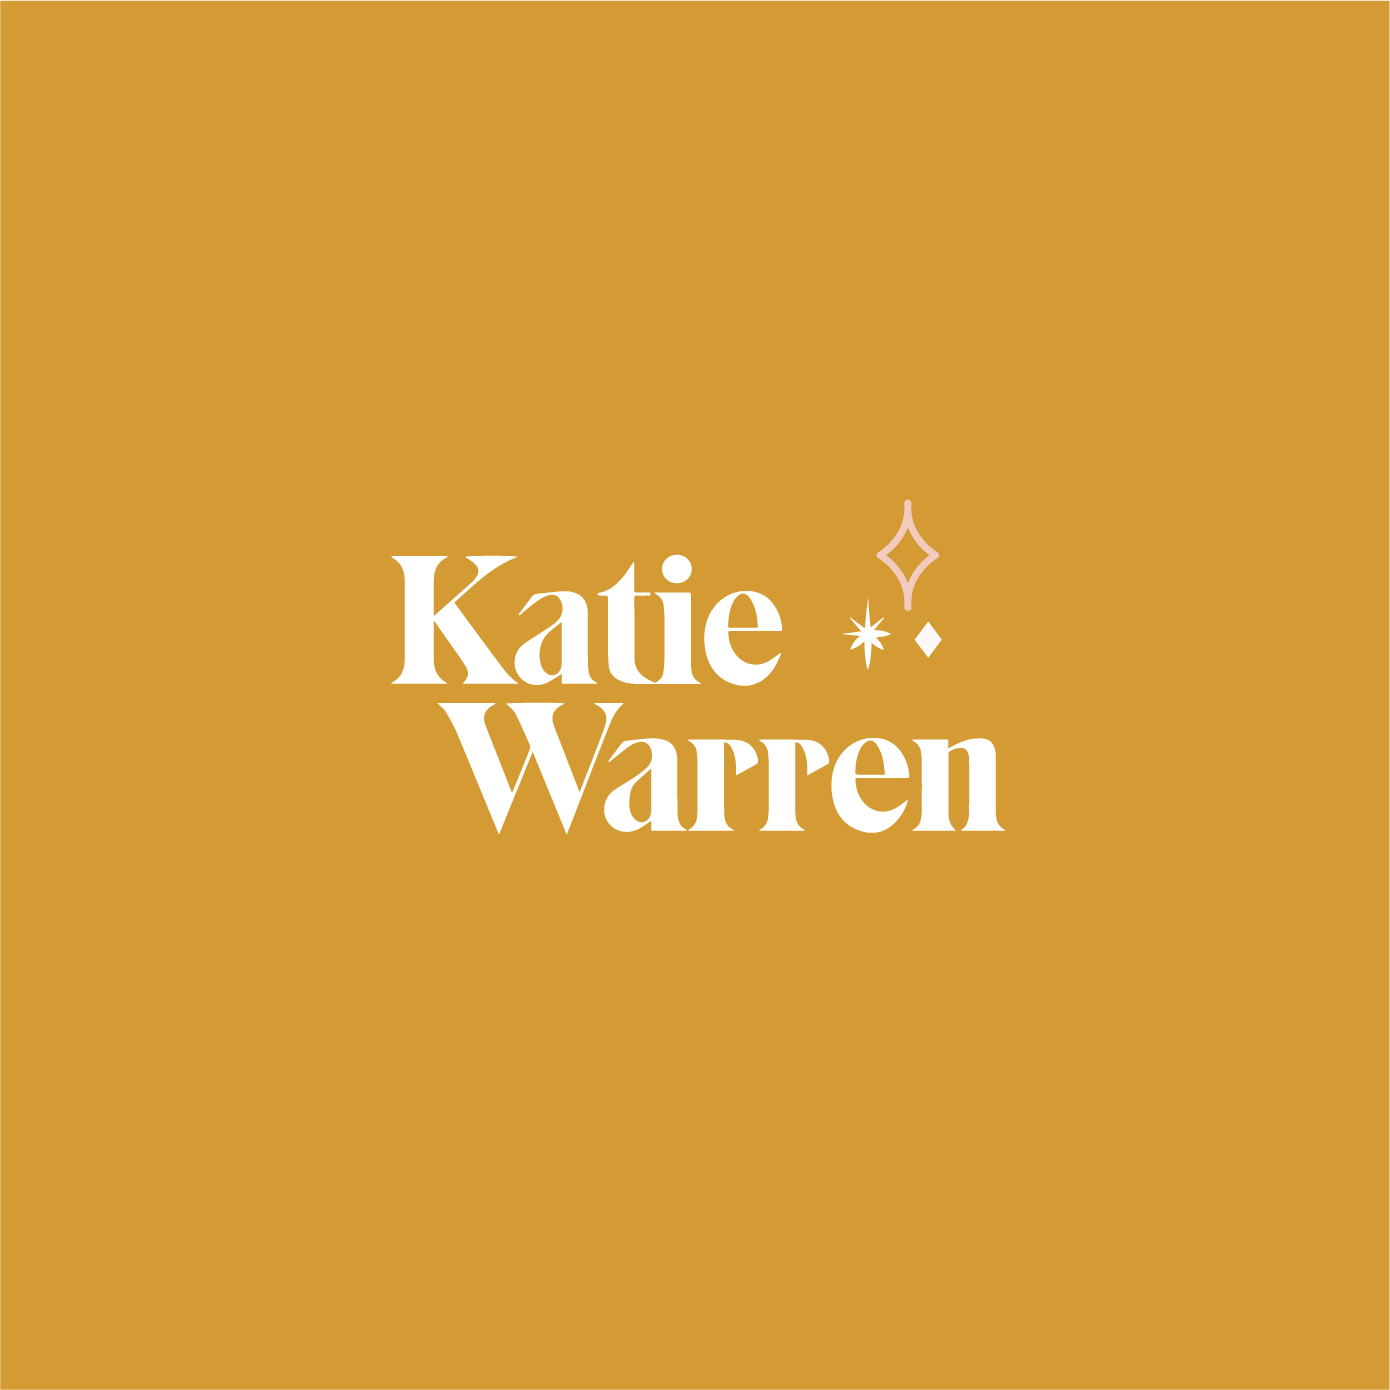 Katie Warren_Social Media Images_Square Logo Images_29.png